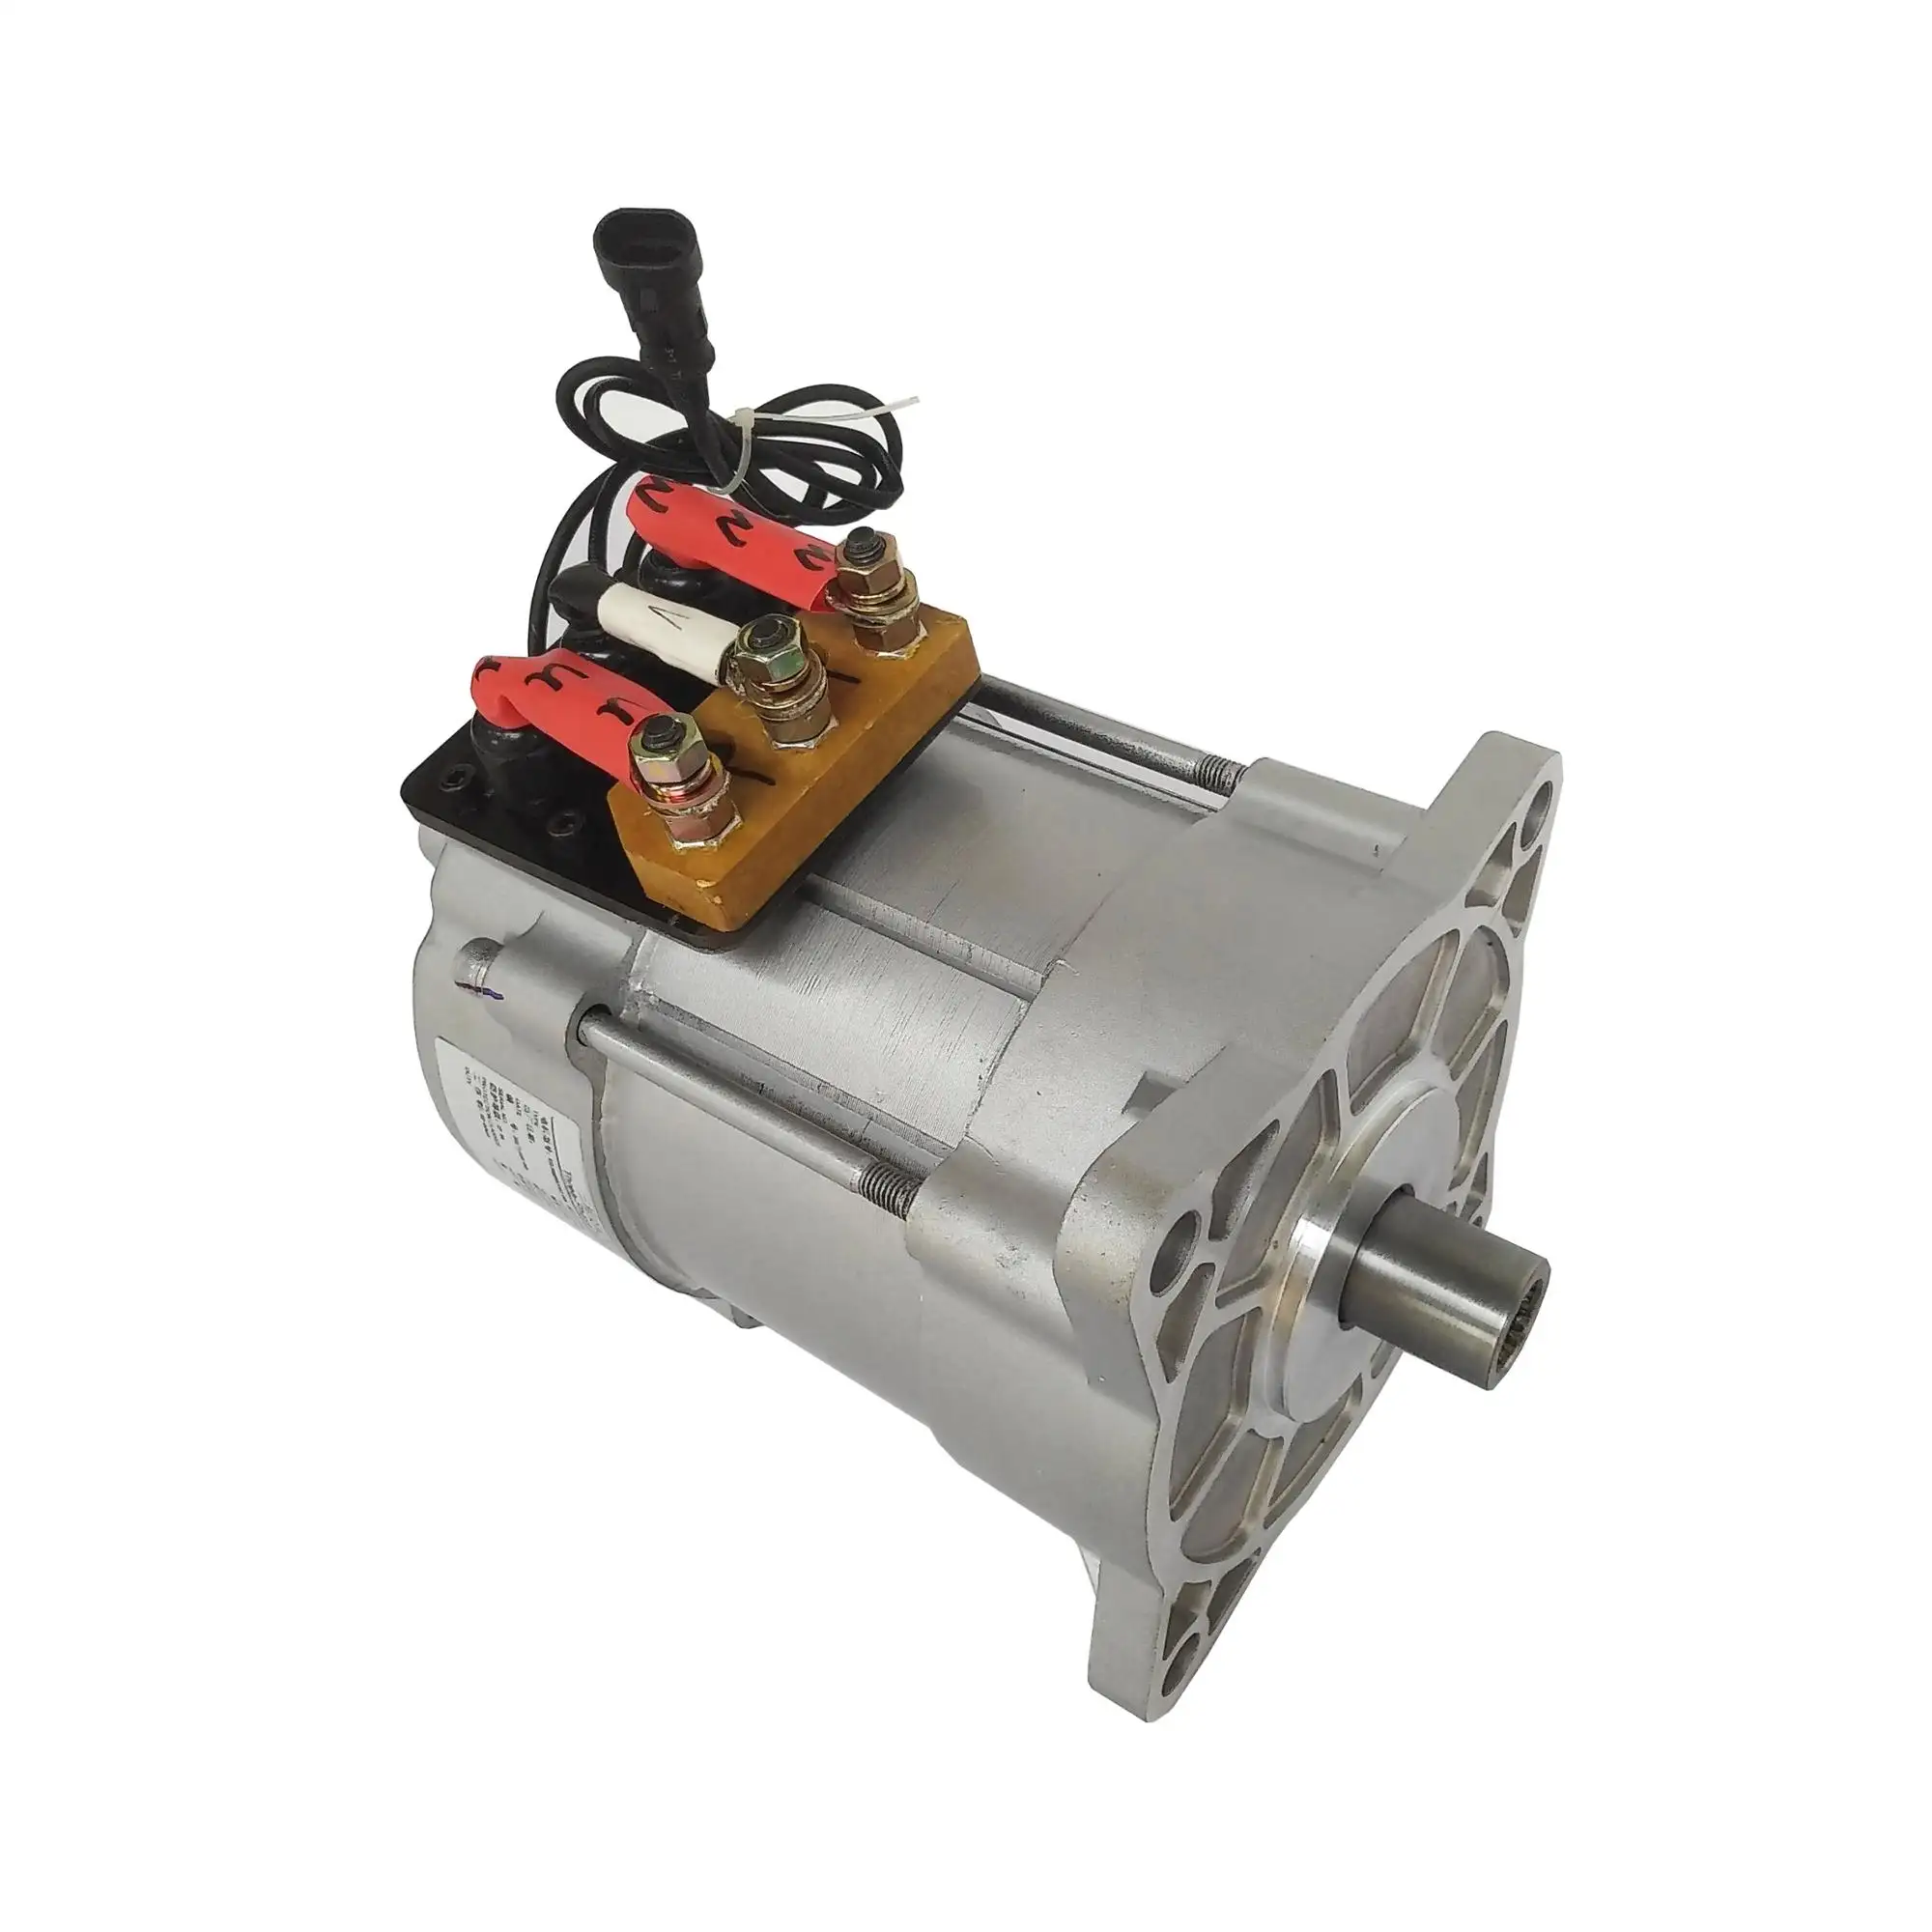 SHINEGLE 48V/60V 3KW Motor de CA Motor eléctrico de alto rendimiento para carrito de Golf/Triciclo EV kit de conversión de coche